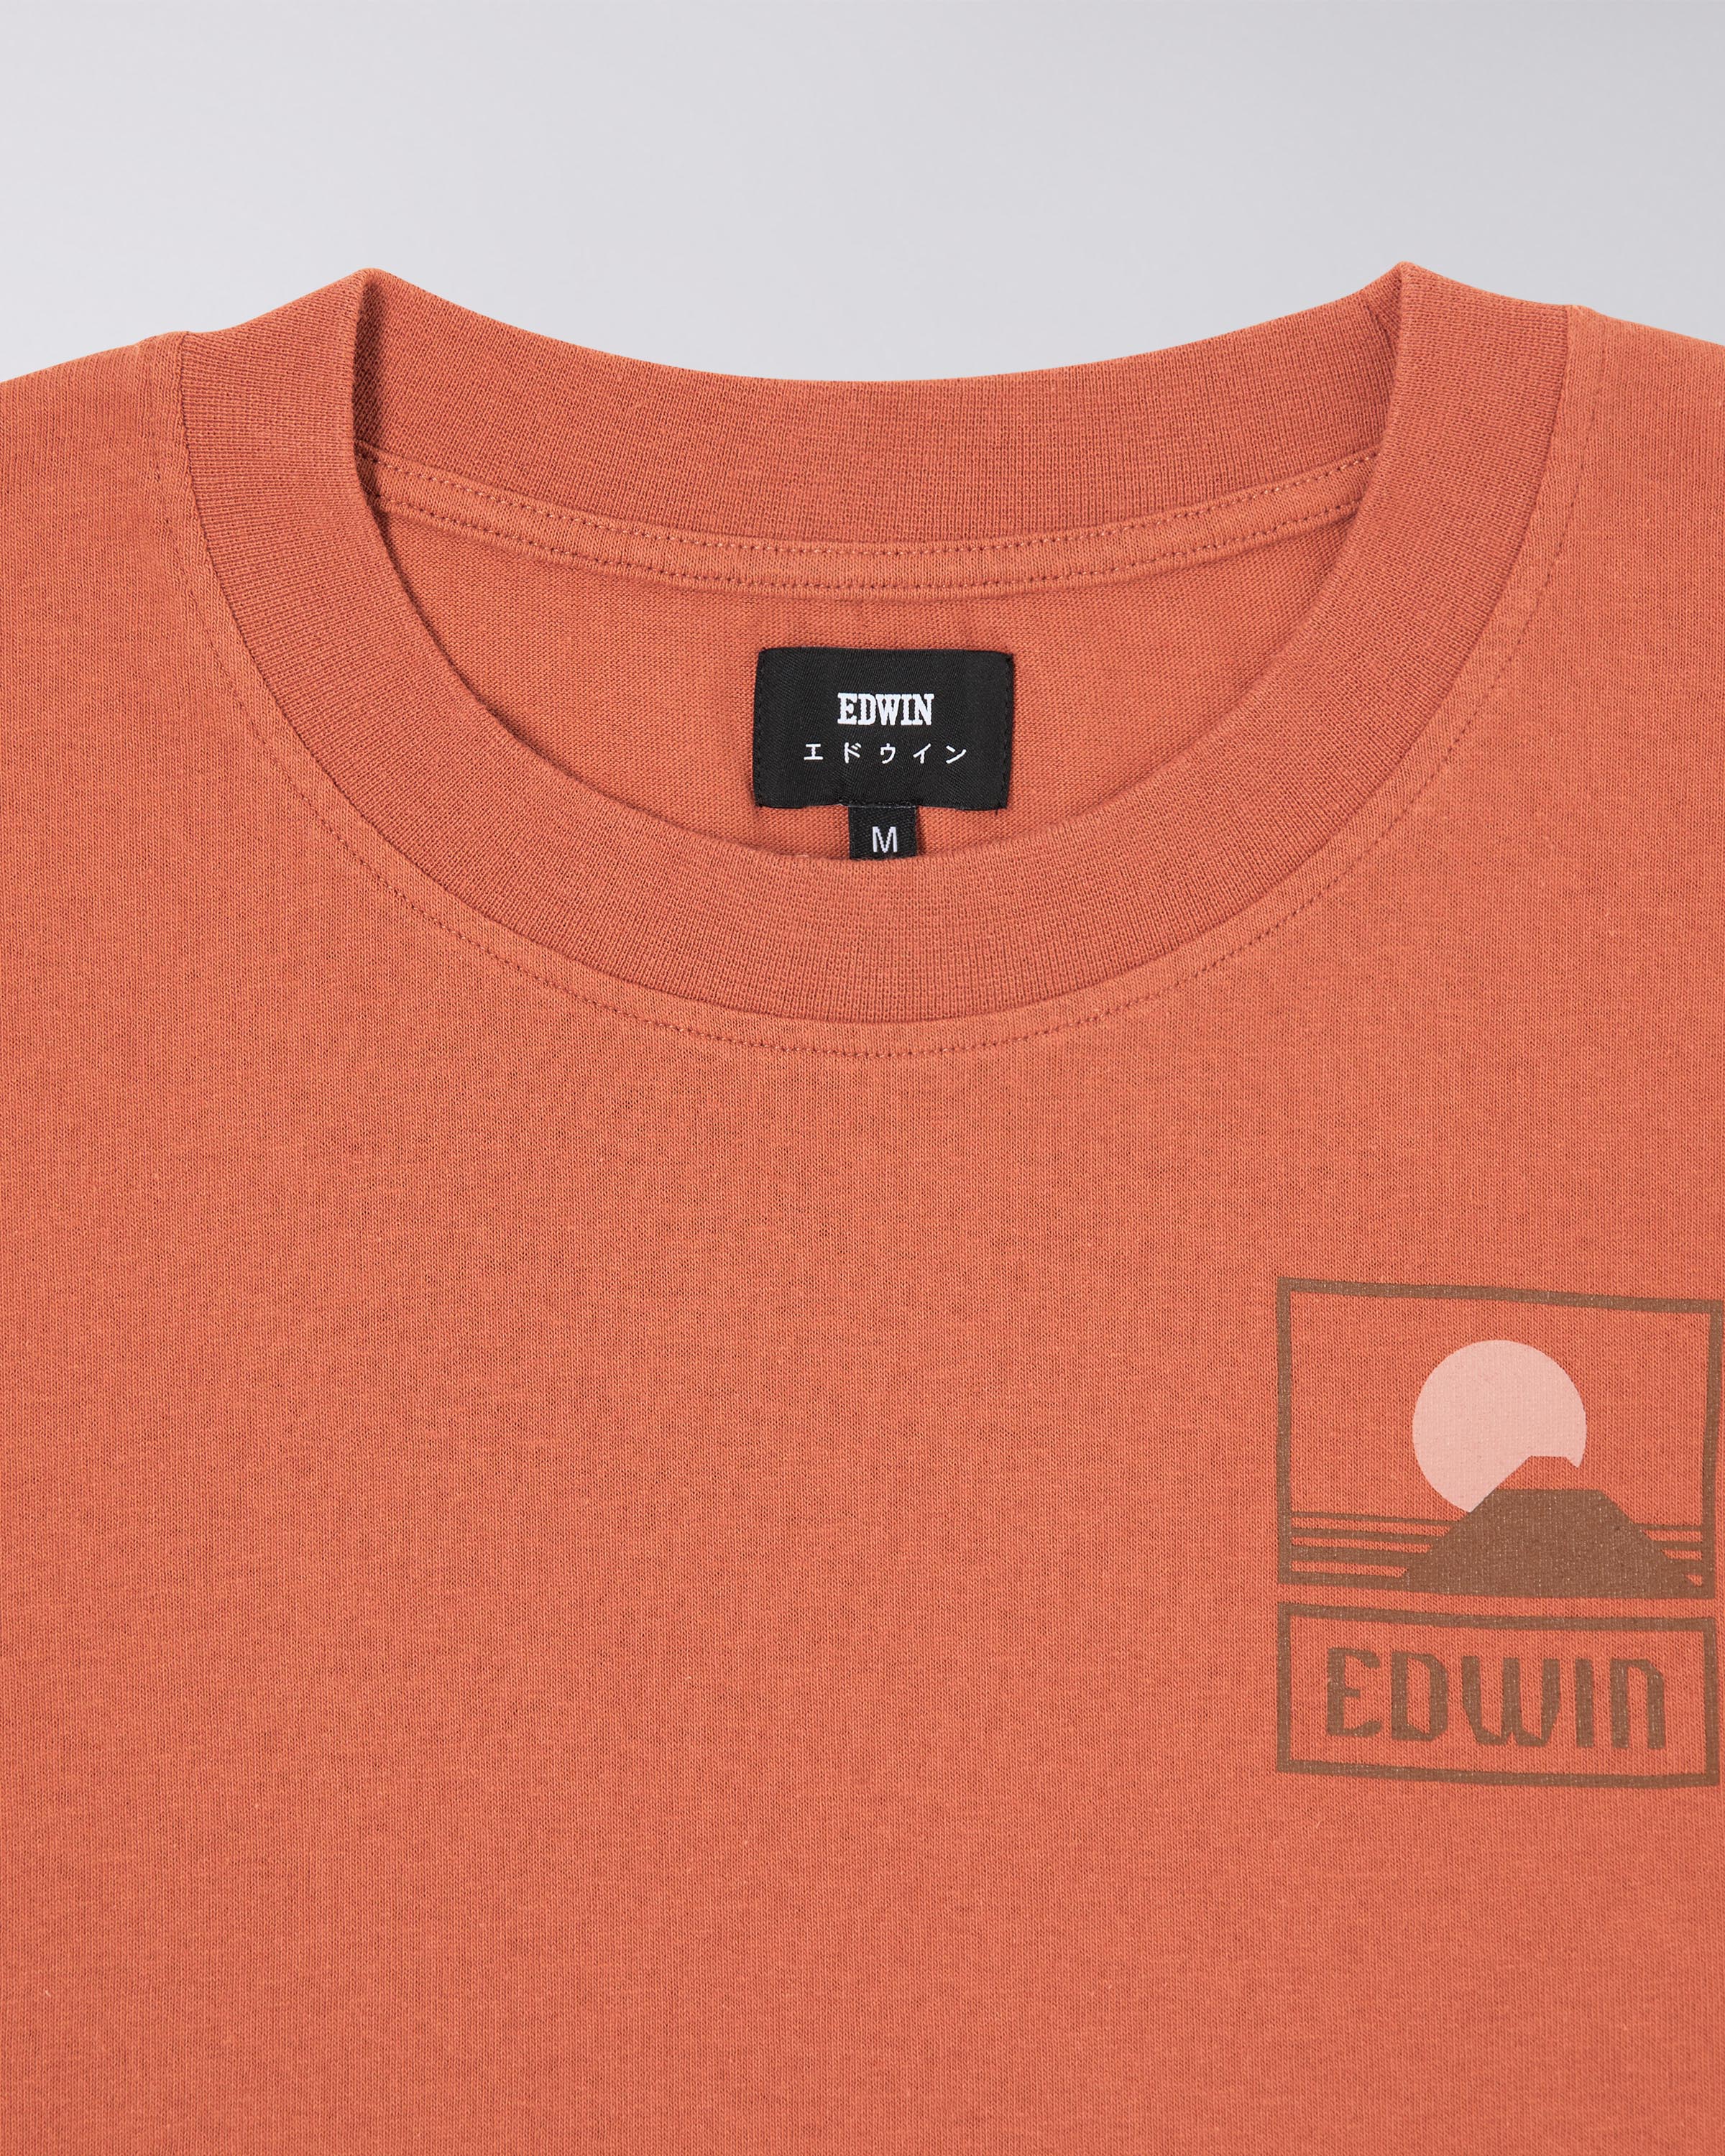 Edwin Sunset On Mt. Fuji Short Sleeve T-Shirt, Navy Blazer, S